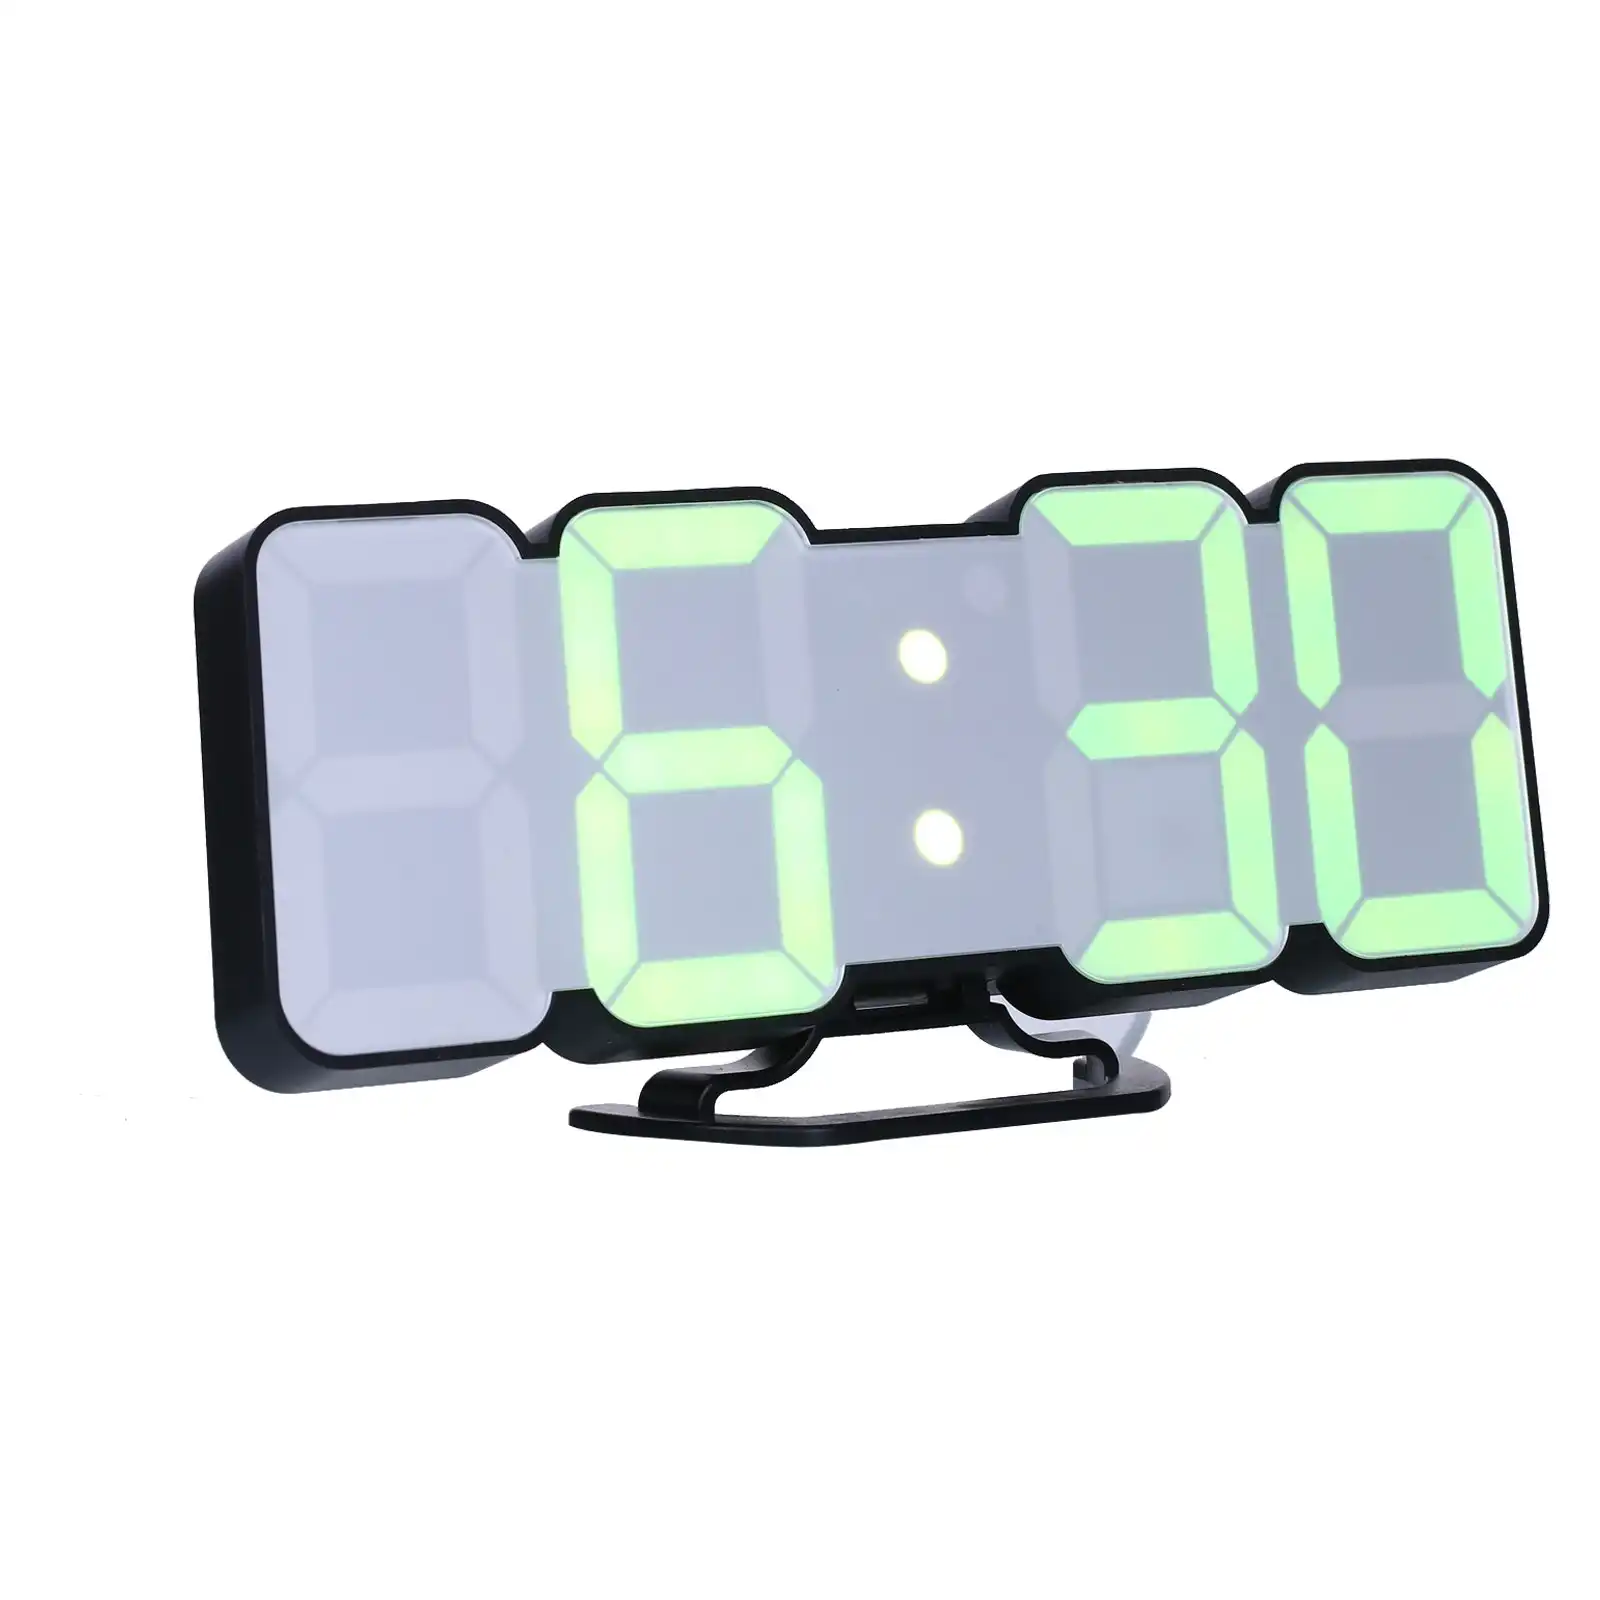 TODO LED Digital Alarm Clock 115 Colour Display USB Power Countdown Timer Remote - Black